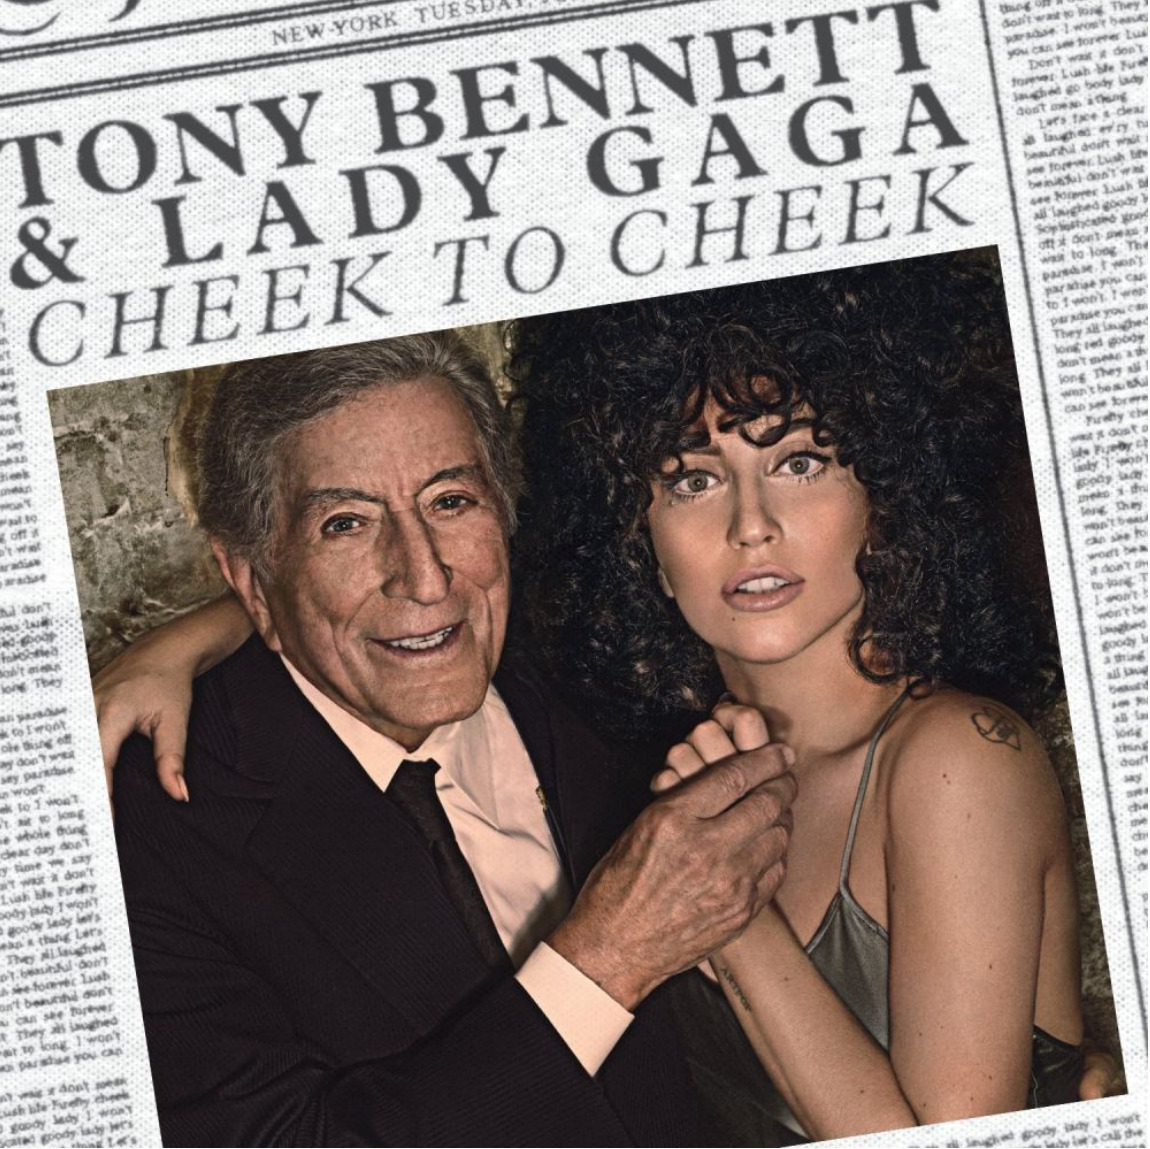 Tony Bennett - Cheek to Cheek (CD) • NEW • Lady Gaga